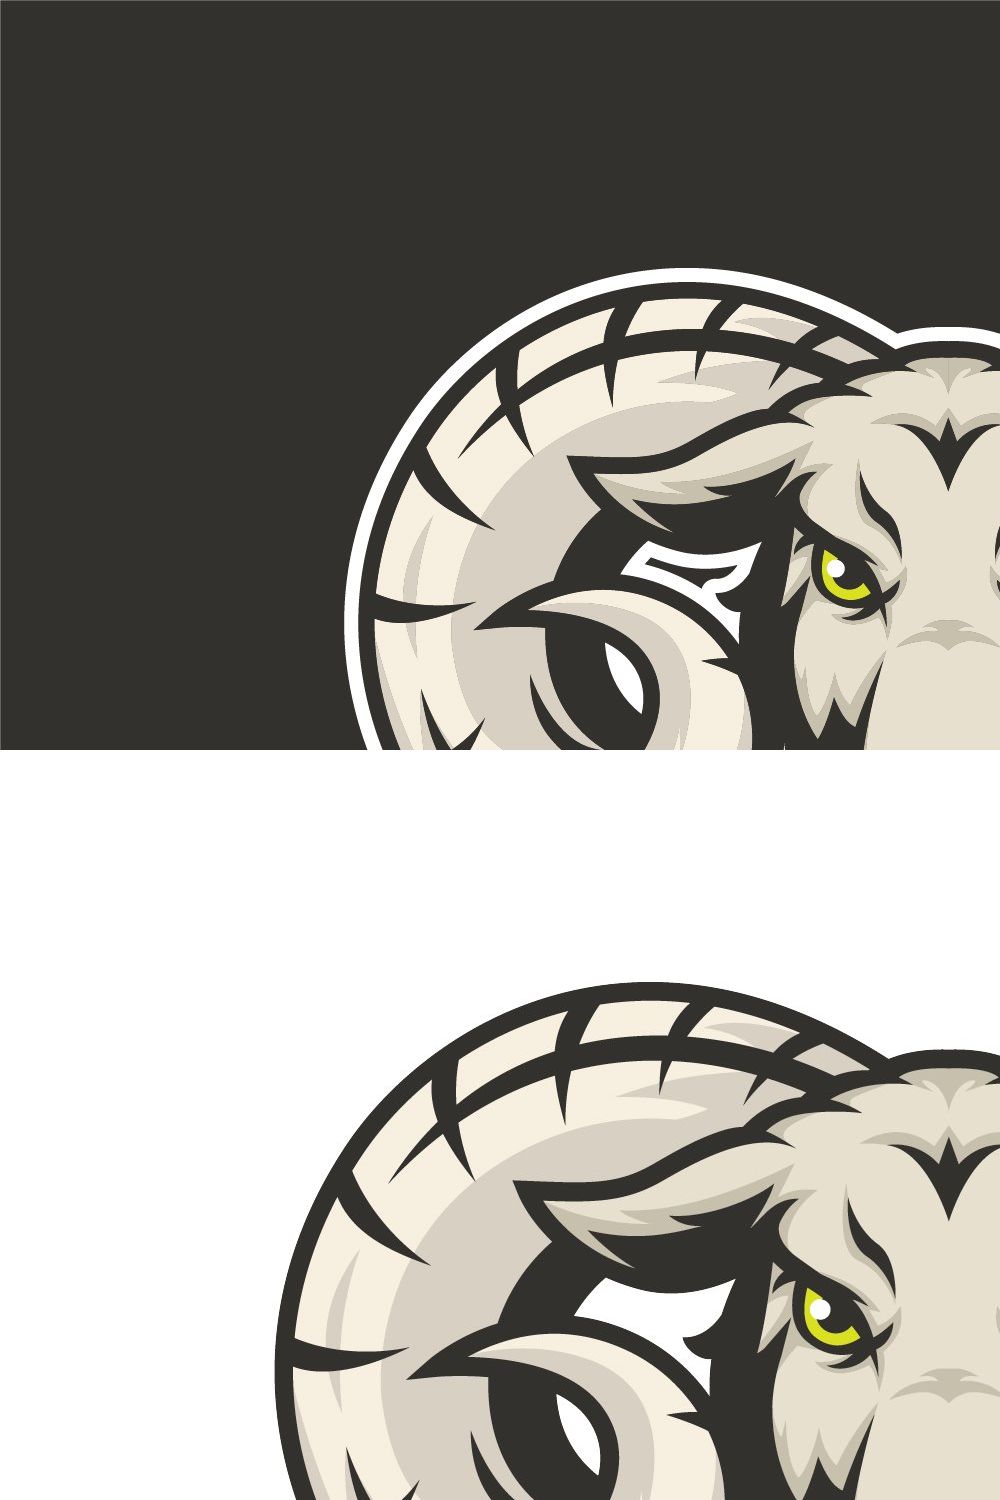 Goat Head Squad-Mascot & Esport Logo pinterest preview image.